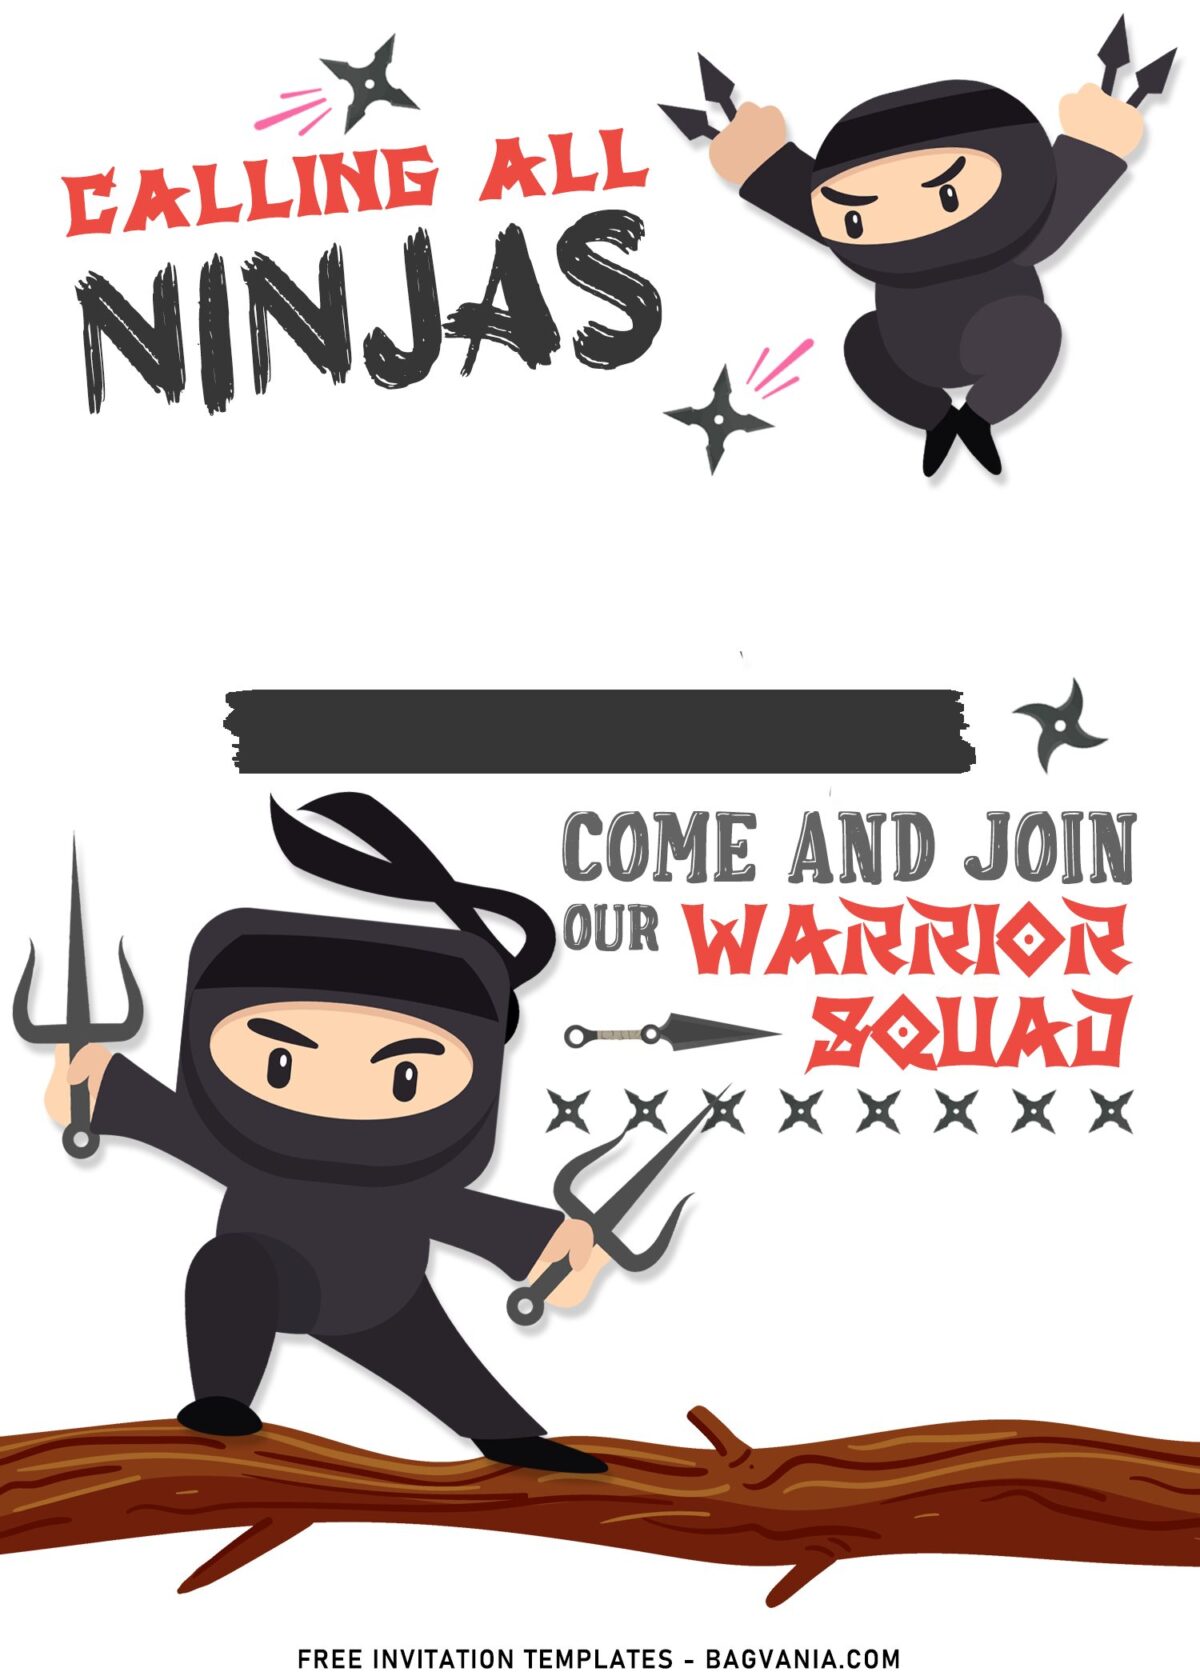 7+ Ninja Themed Birthday Invitation Templates For The Boys Birthday with cute Ninja in Black Ninja Suit